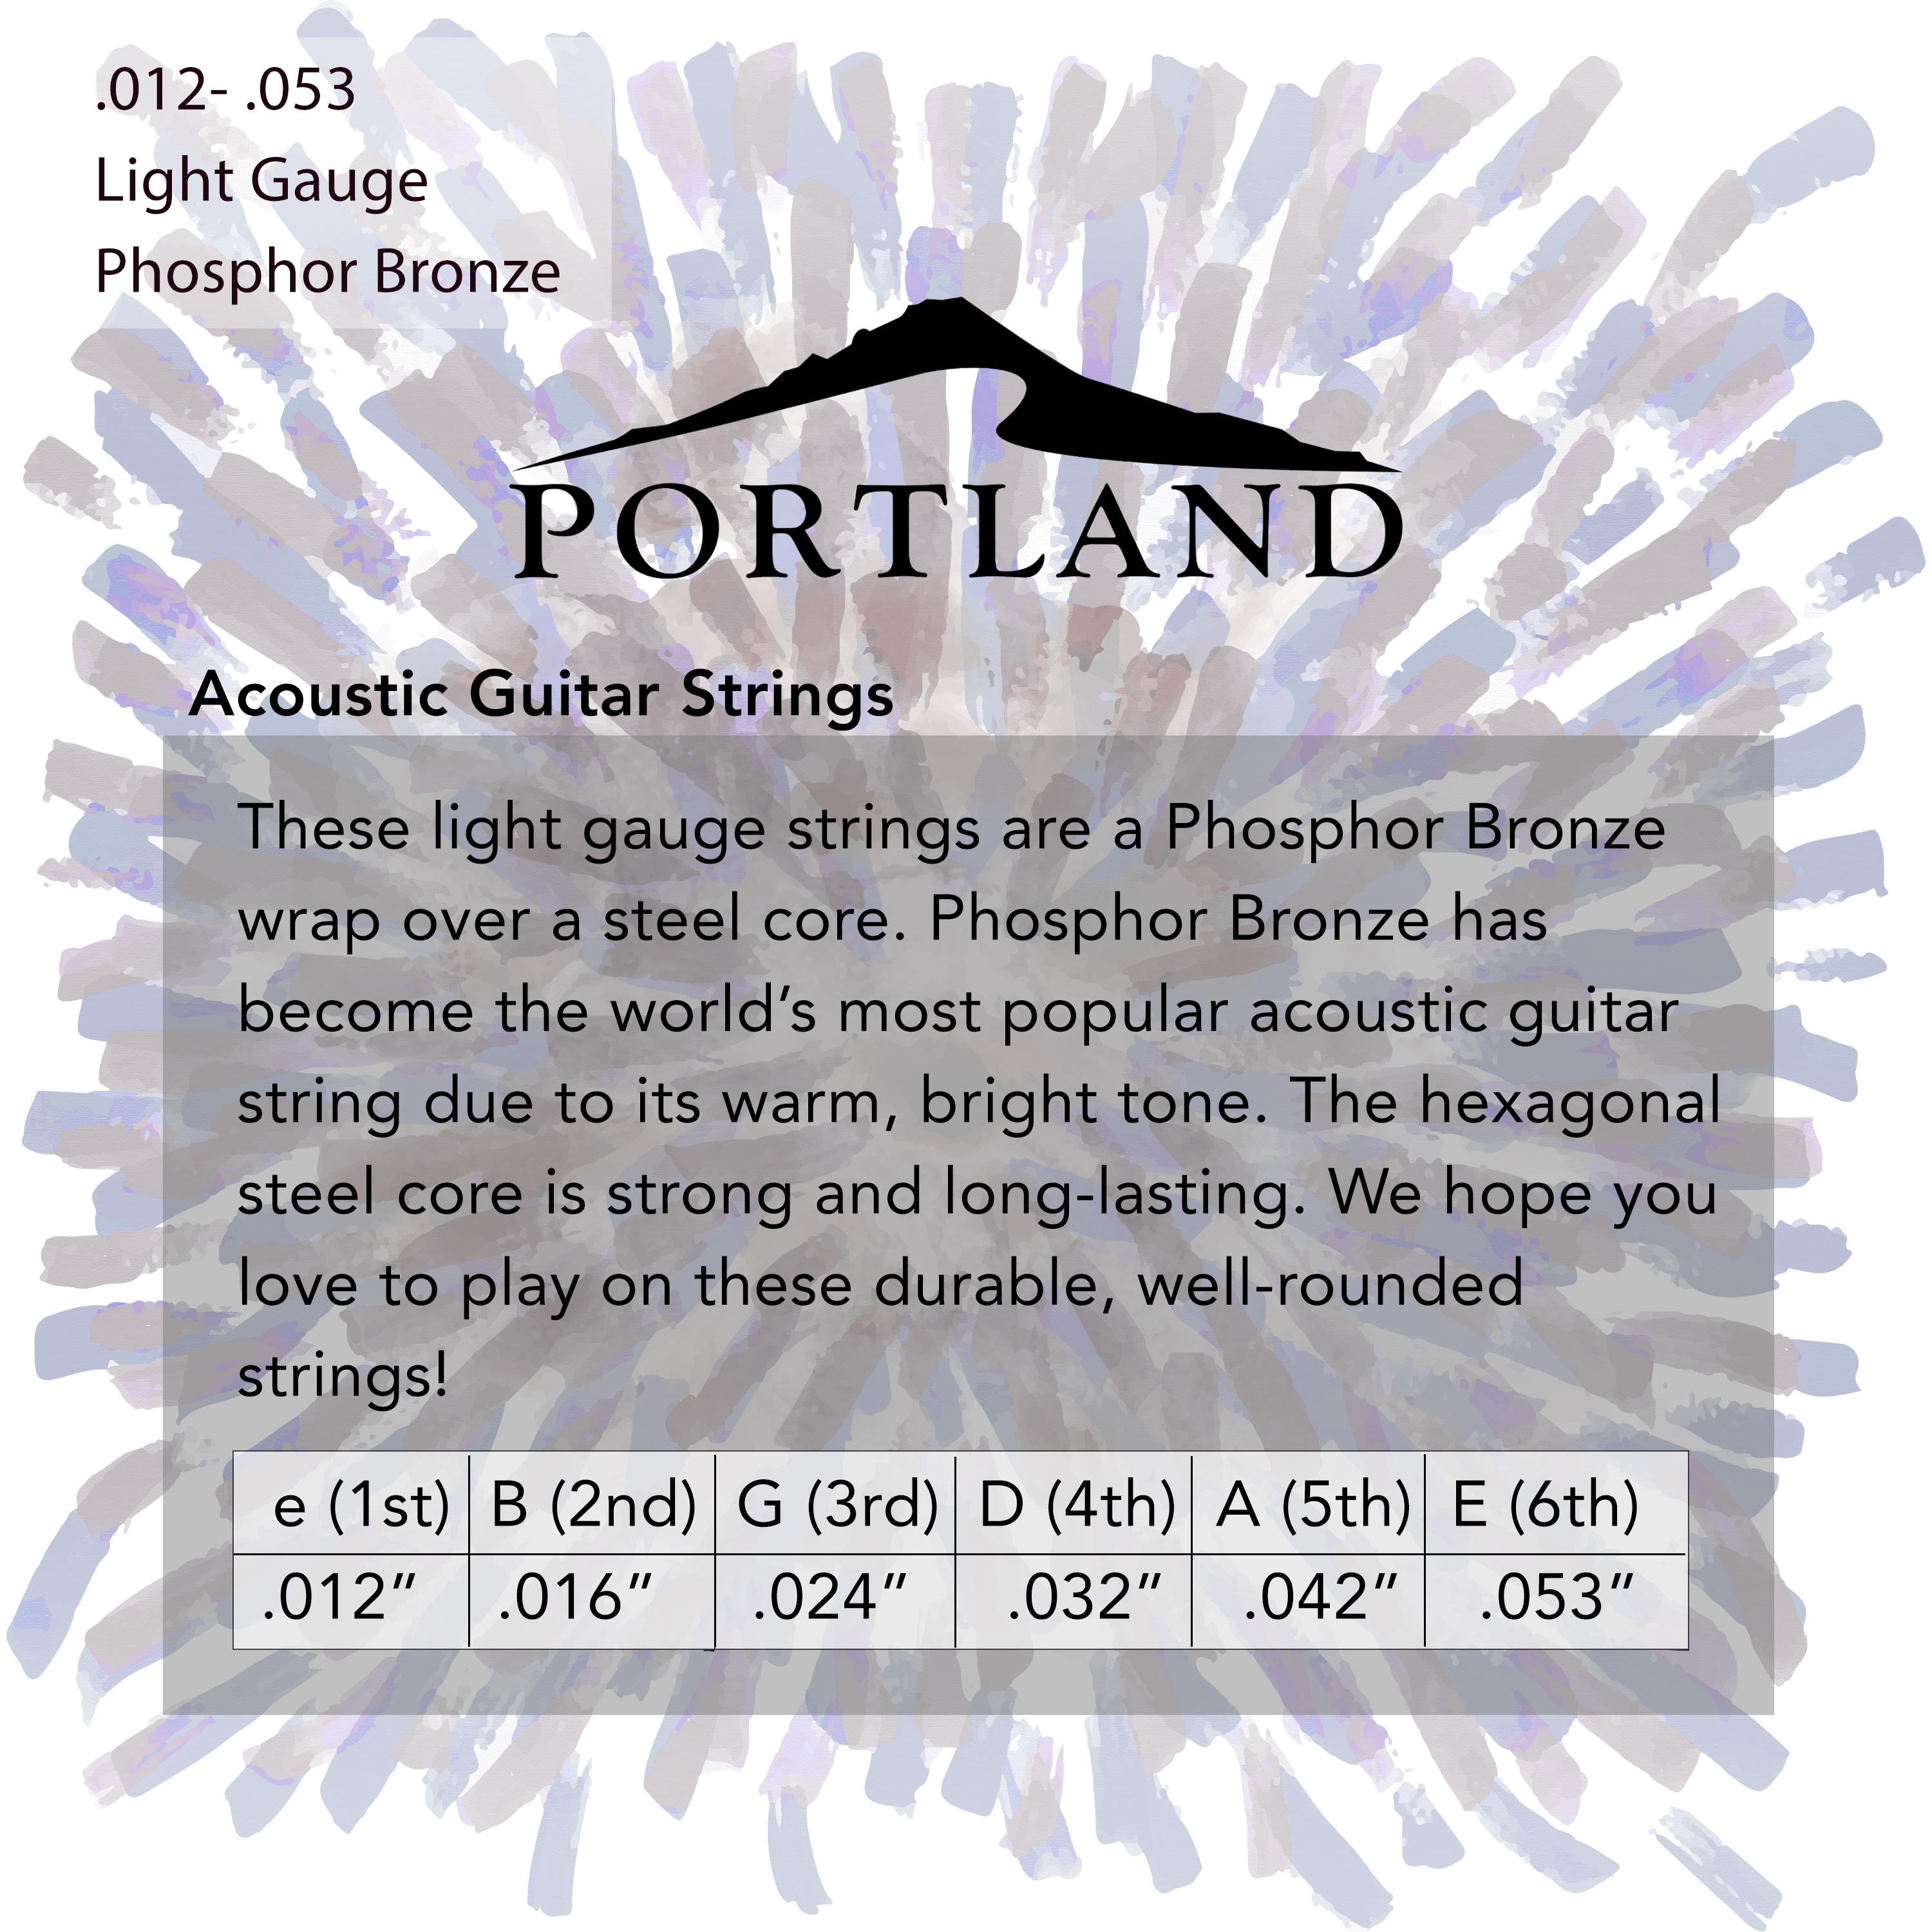 Portland Phosphor Bronze Acoustic Guitar Strings in action